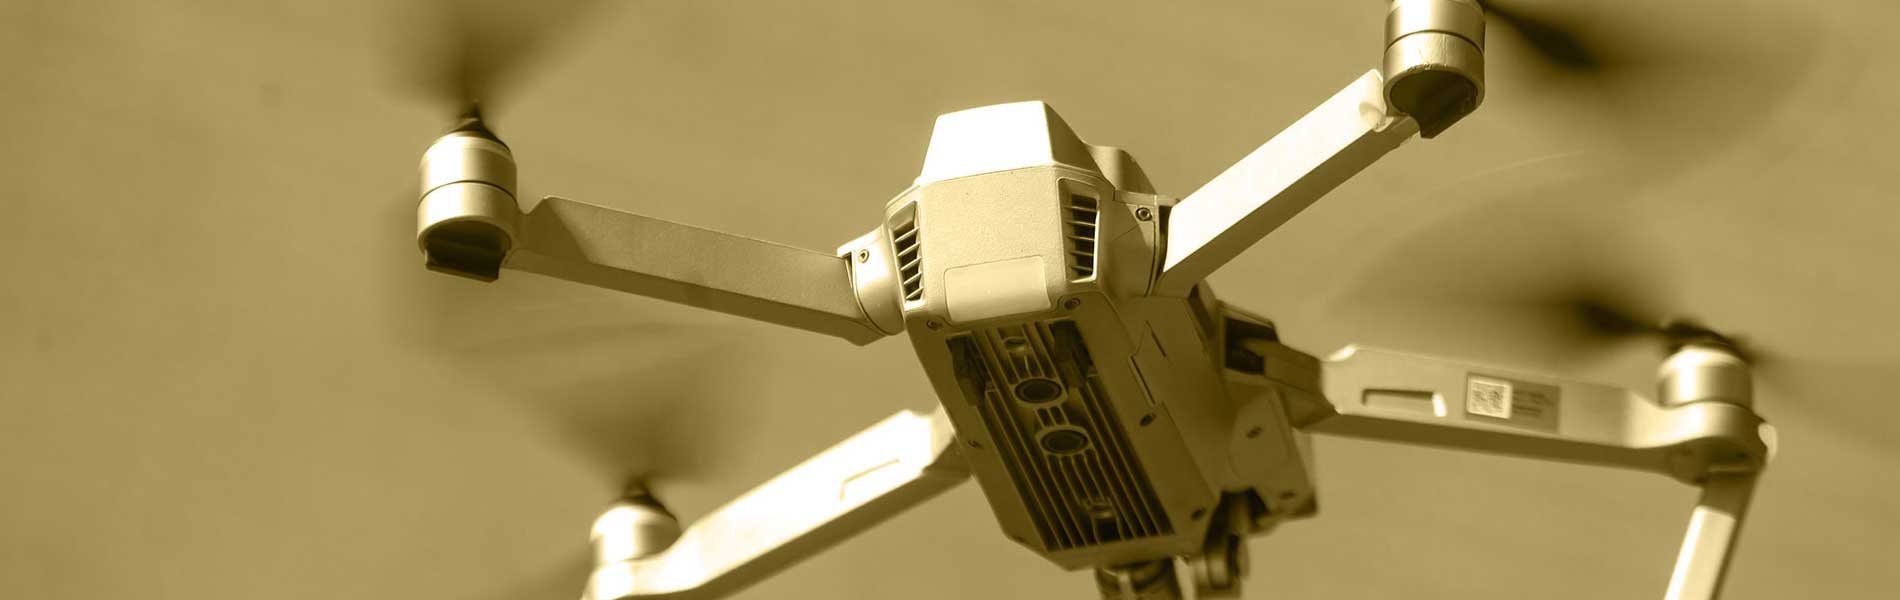 Pilote drone professionnel Port-De-Bouc (13110)